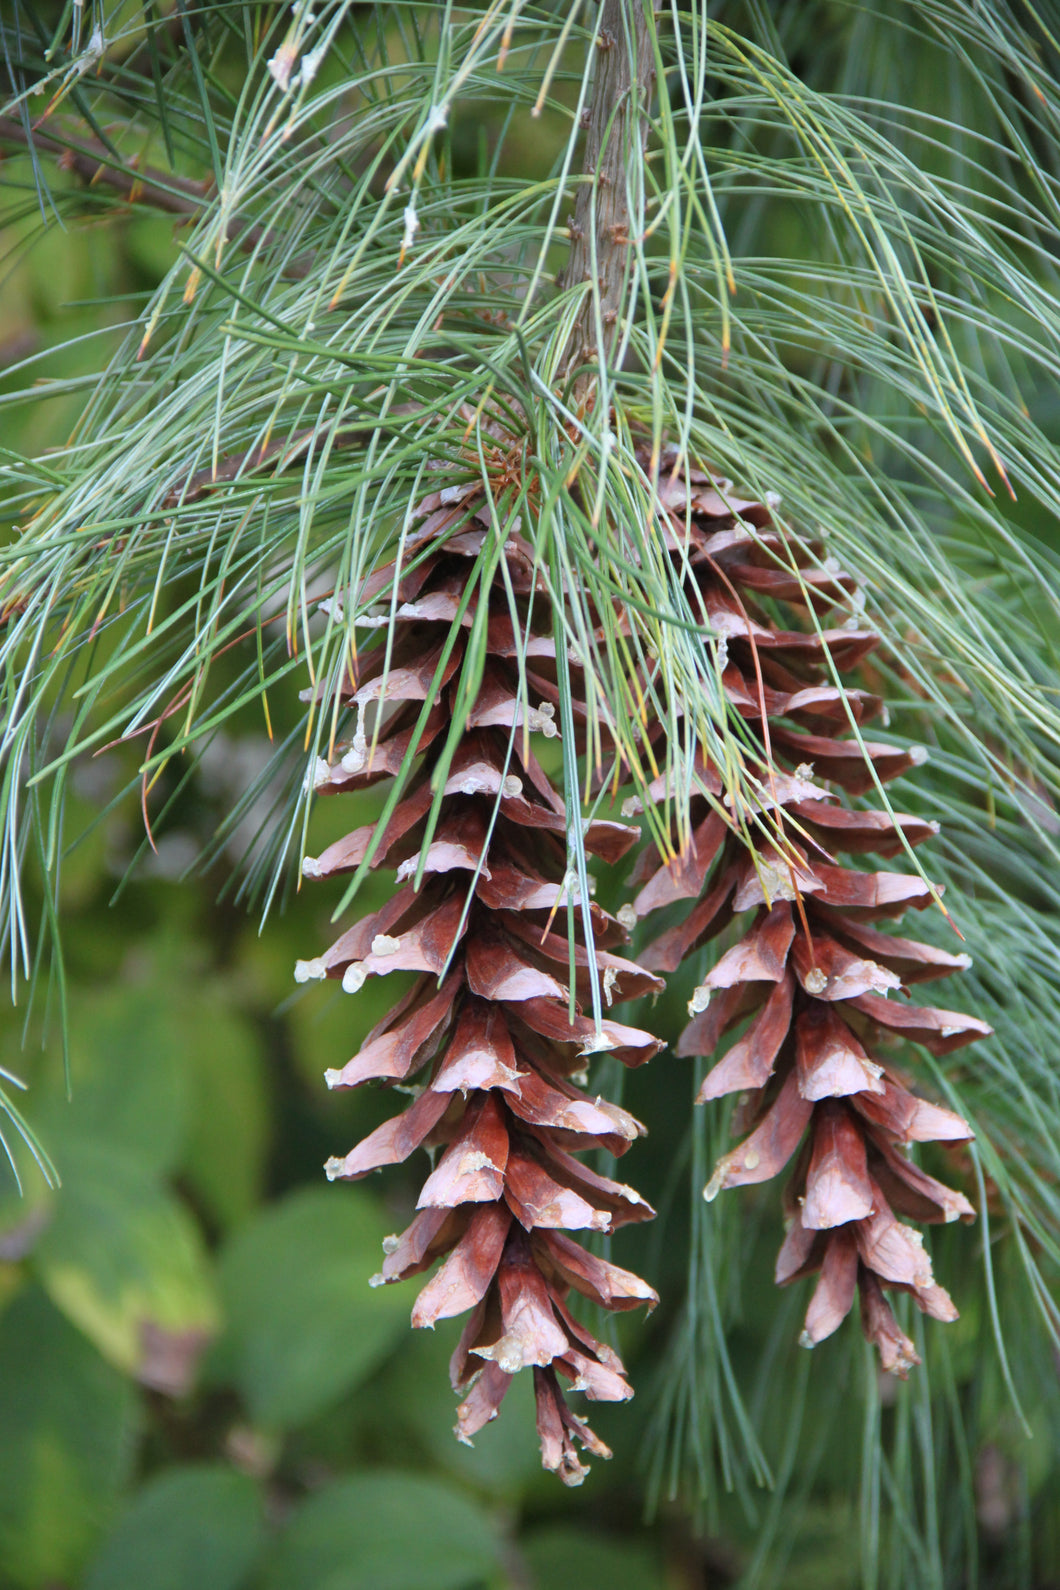 Eastern White Pine Pinus strobus 100 Seeds